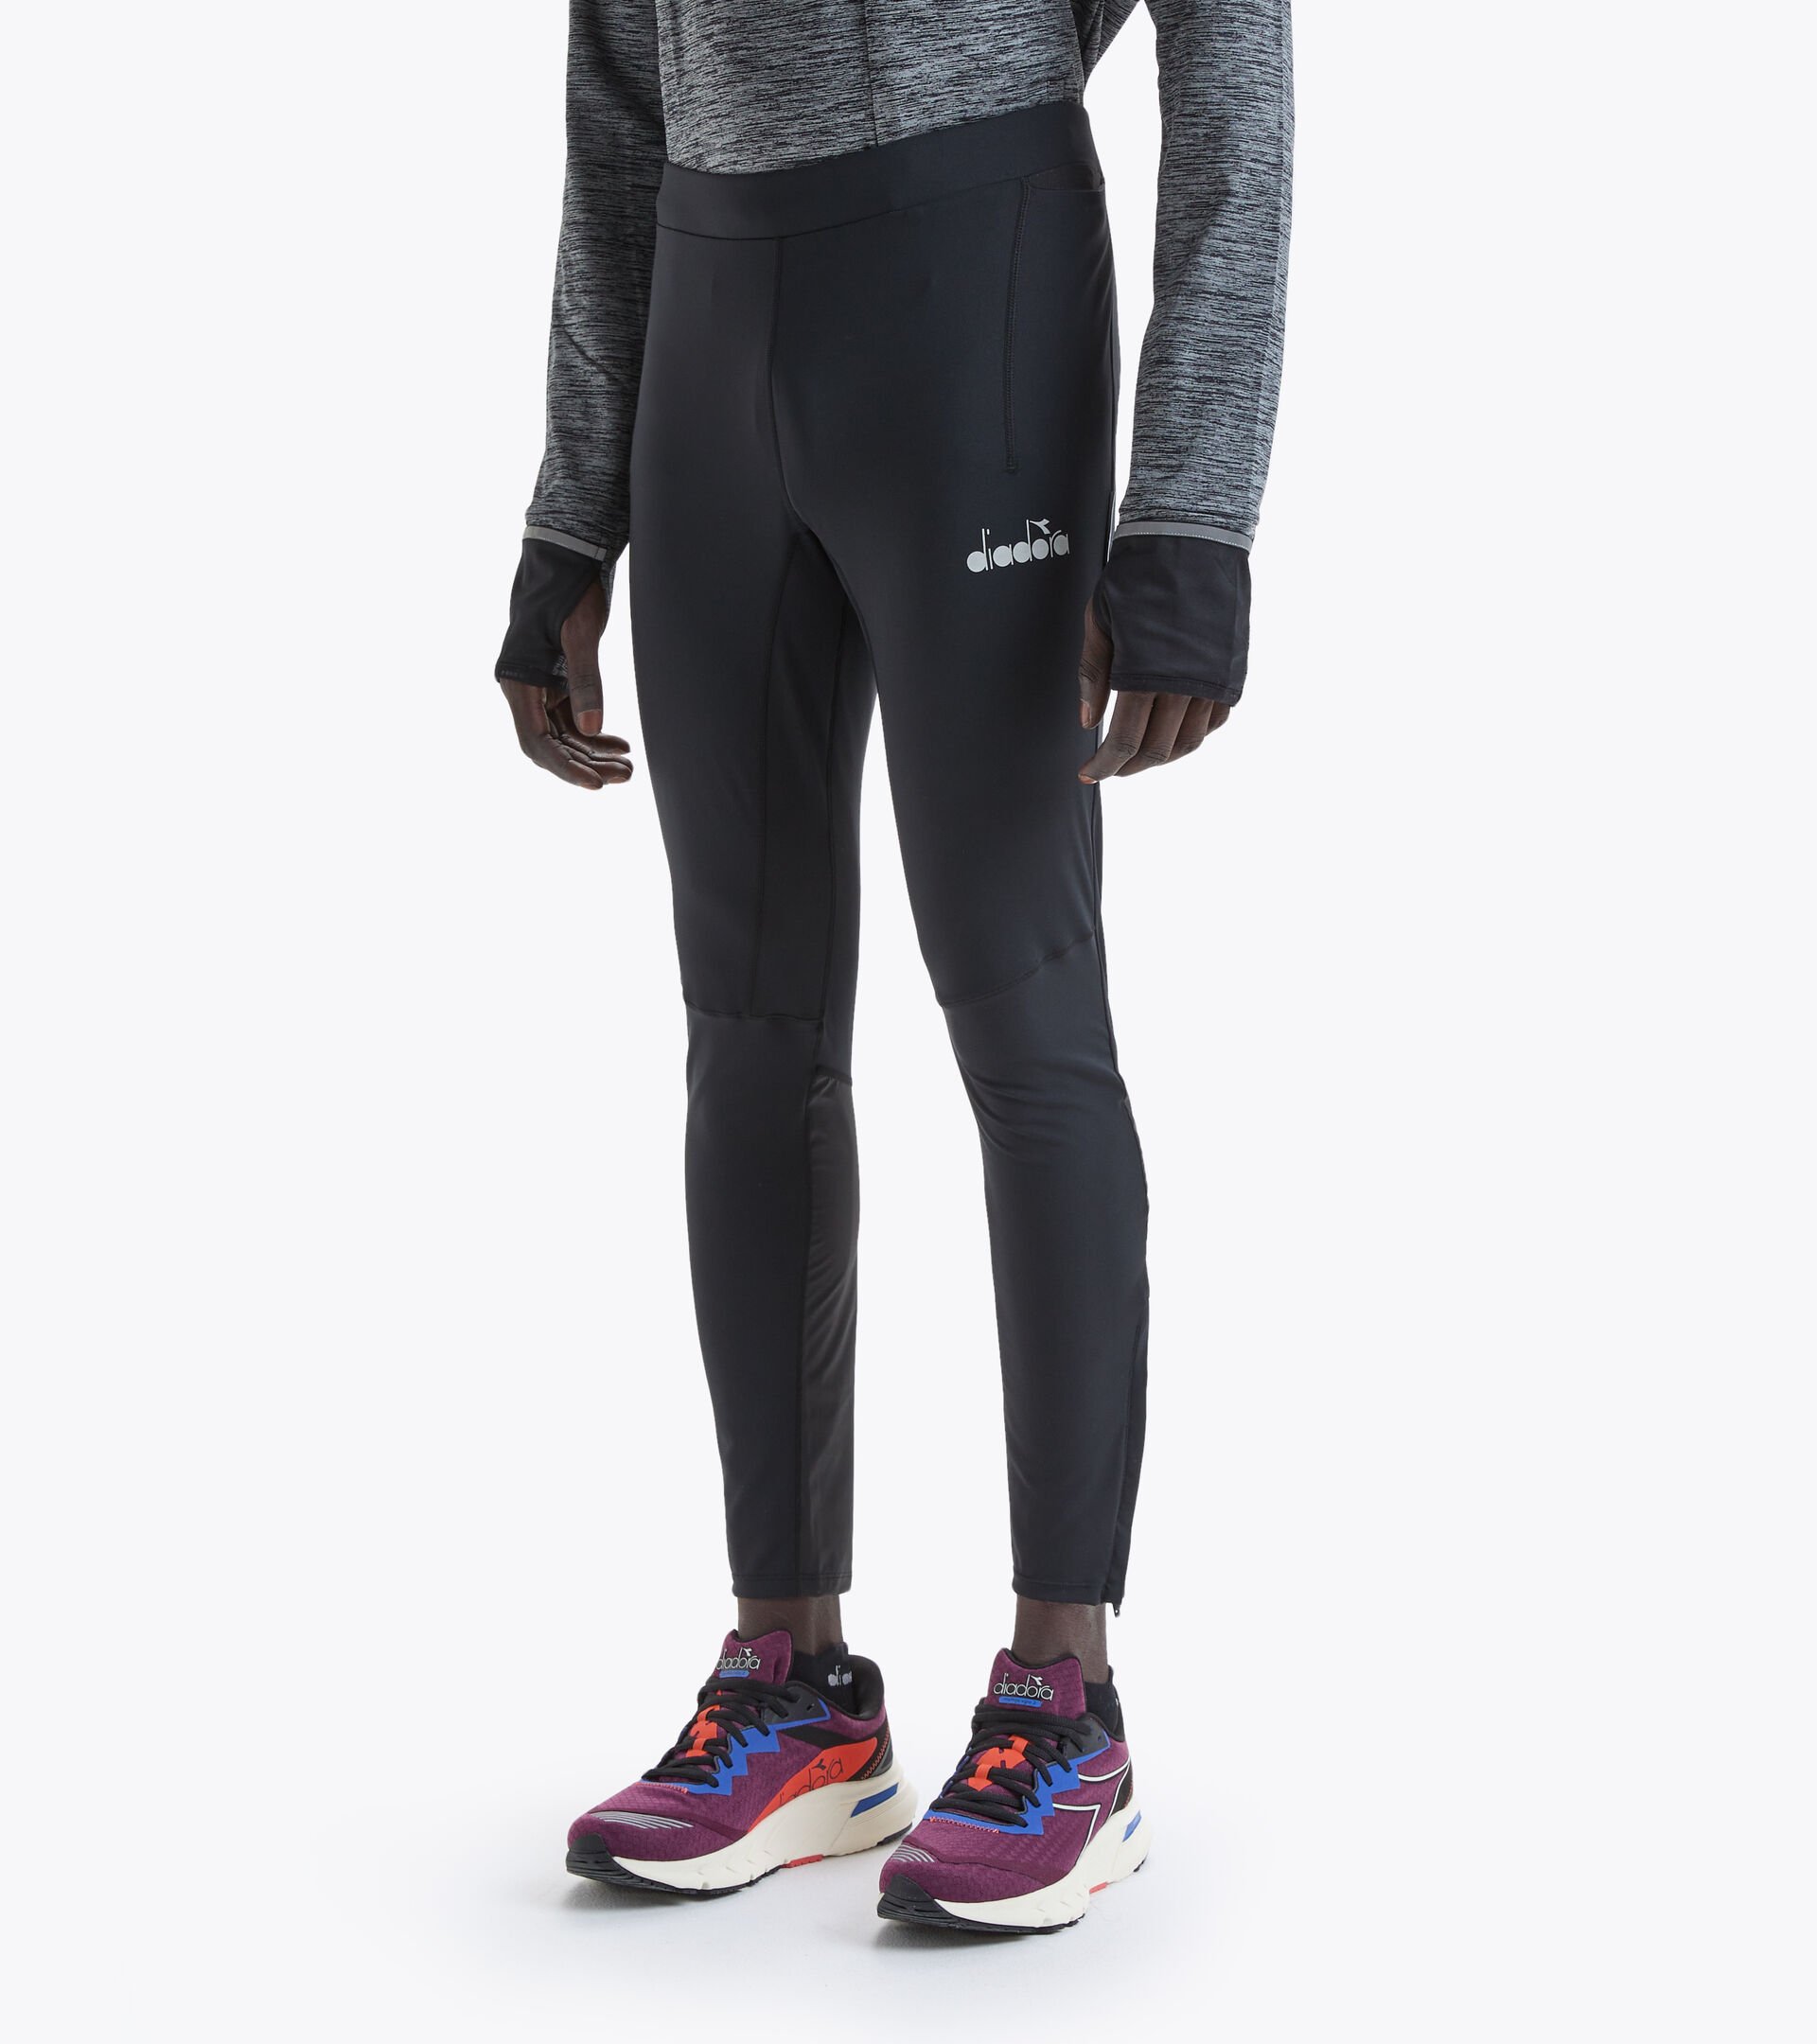 WINTER TIGHTS ONE Running leggings - Diadora Online Store US